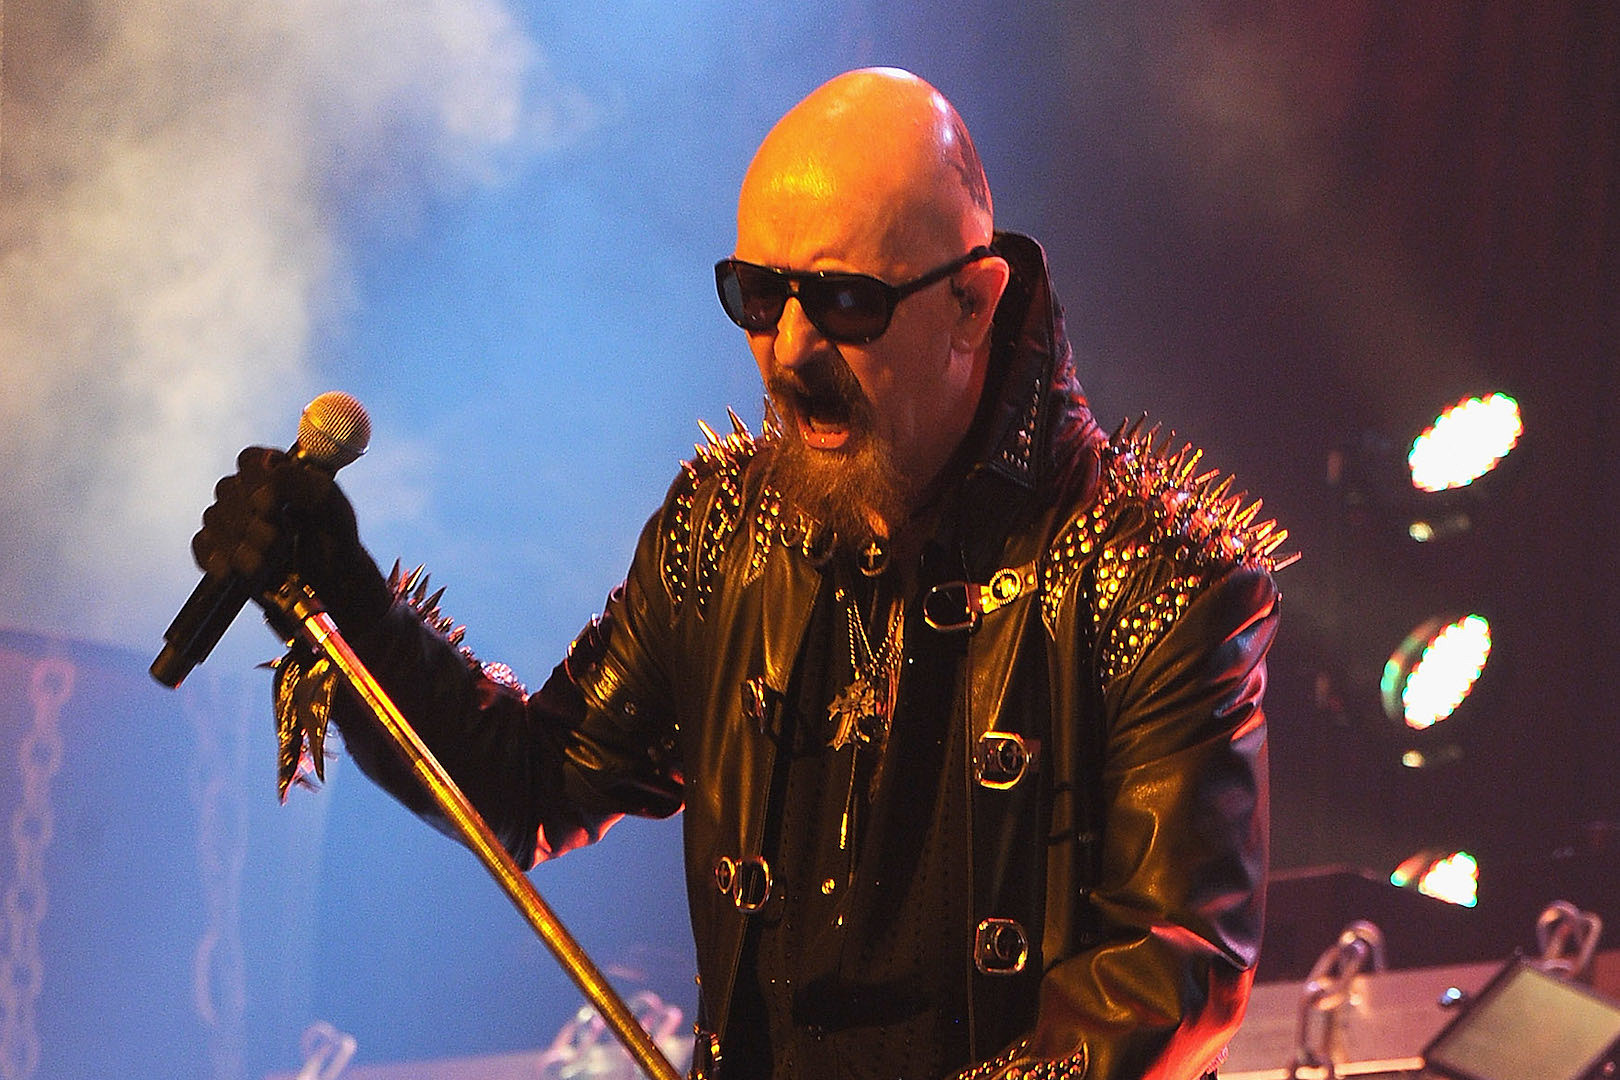 Judas Priest 'Metal God' Rob Halford talks music, addiction